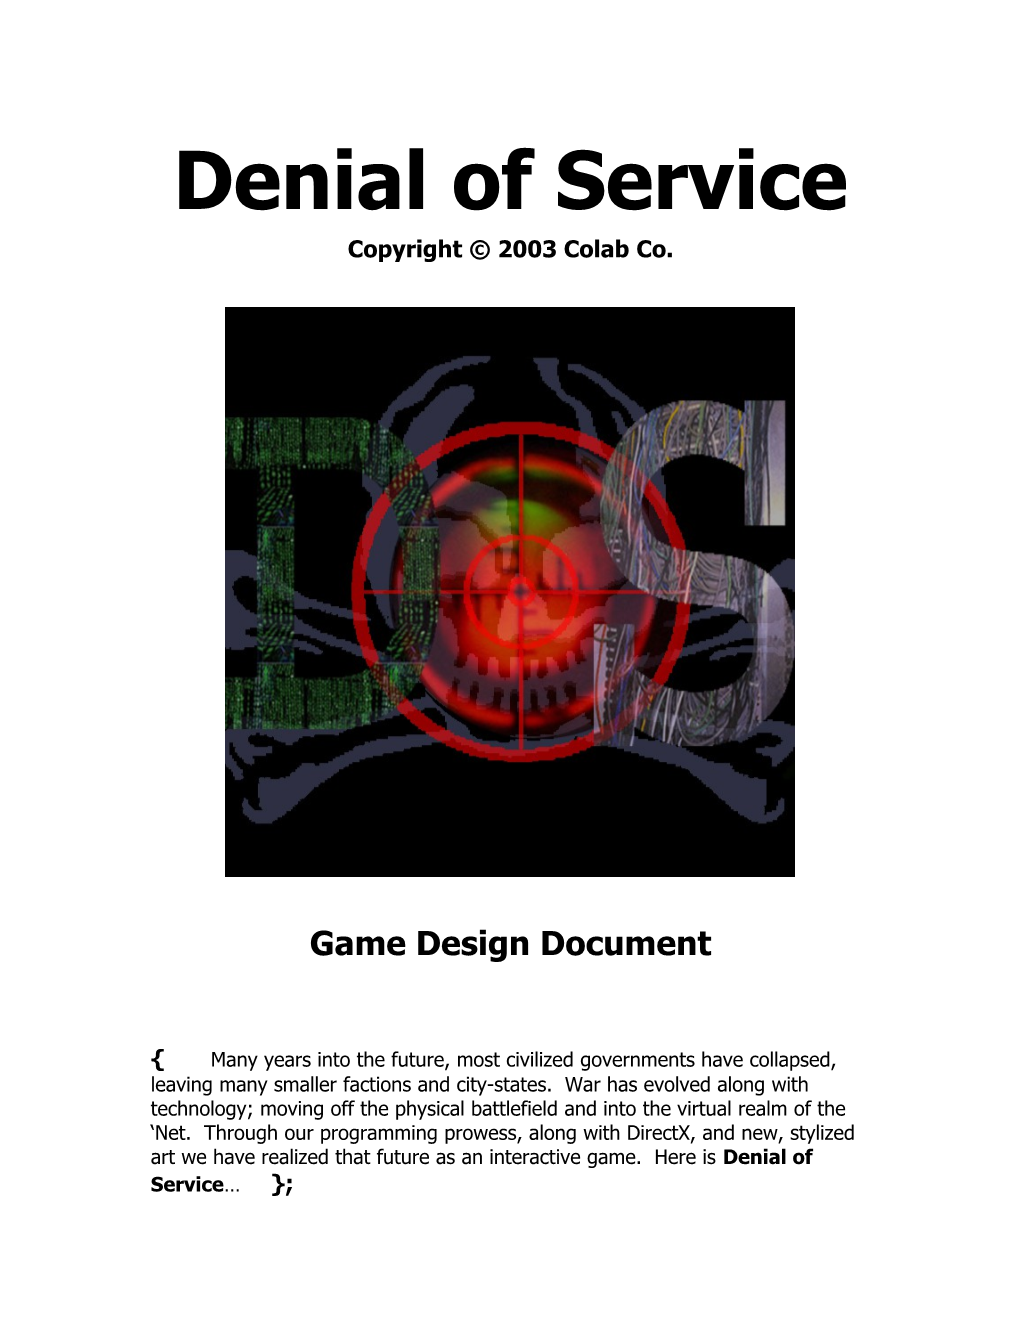 Game Design Document Structure